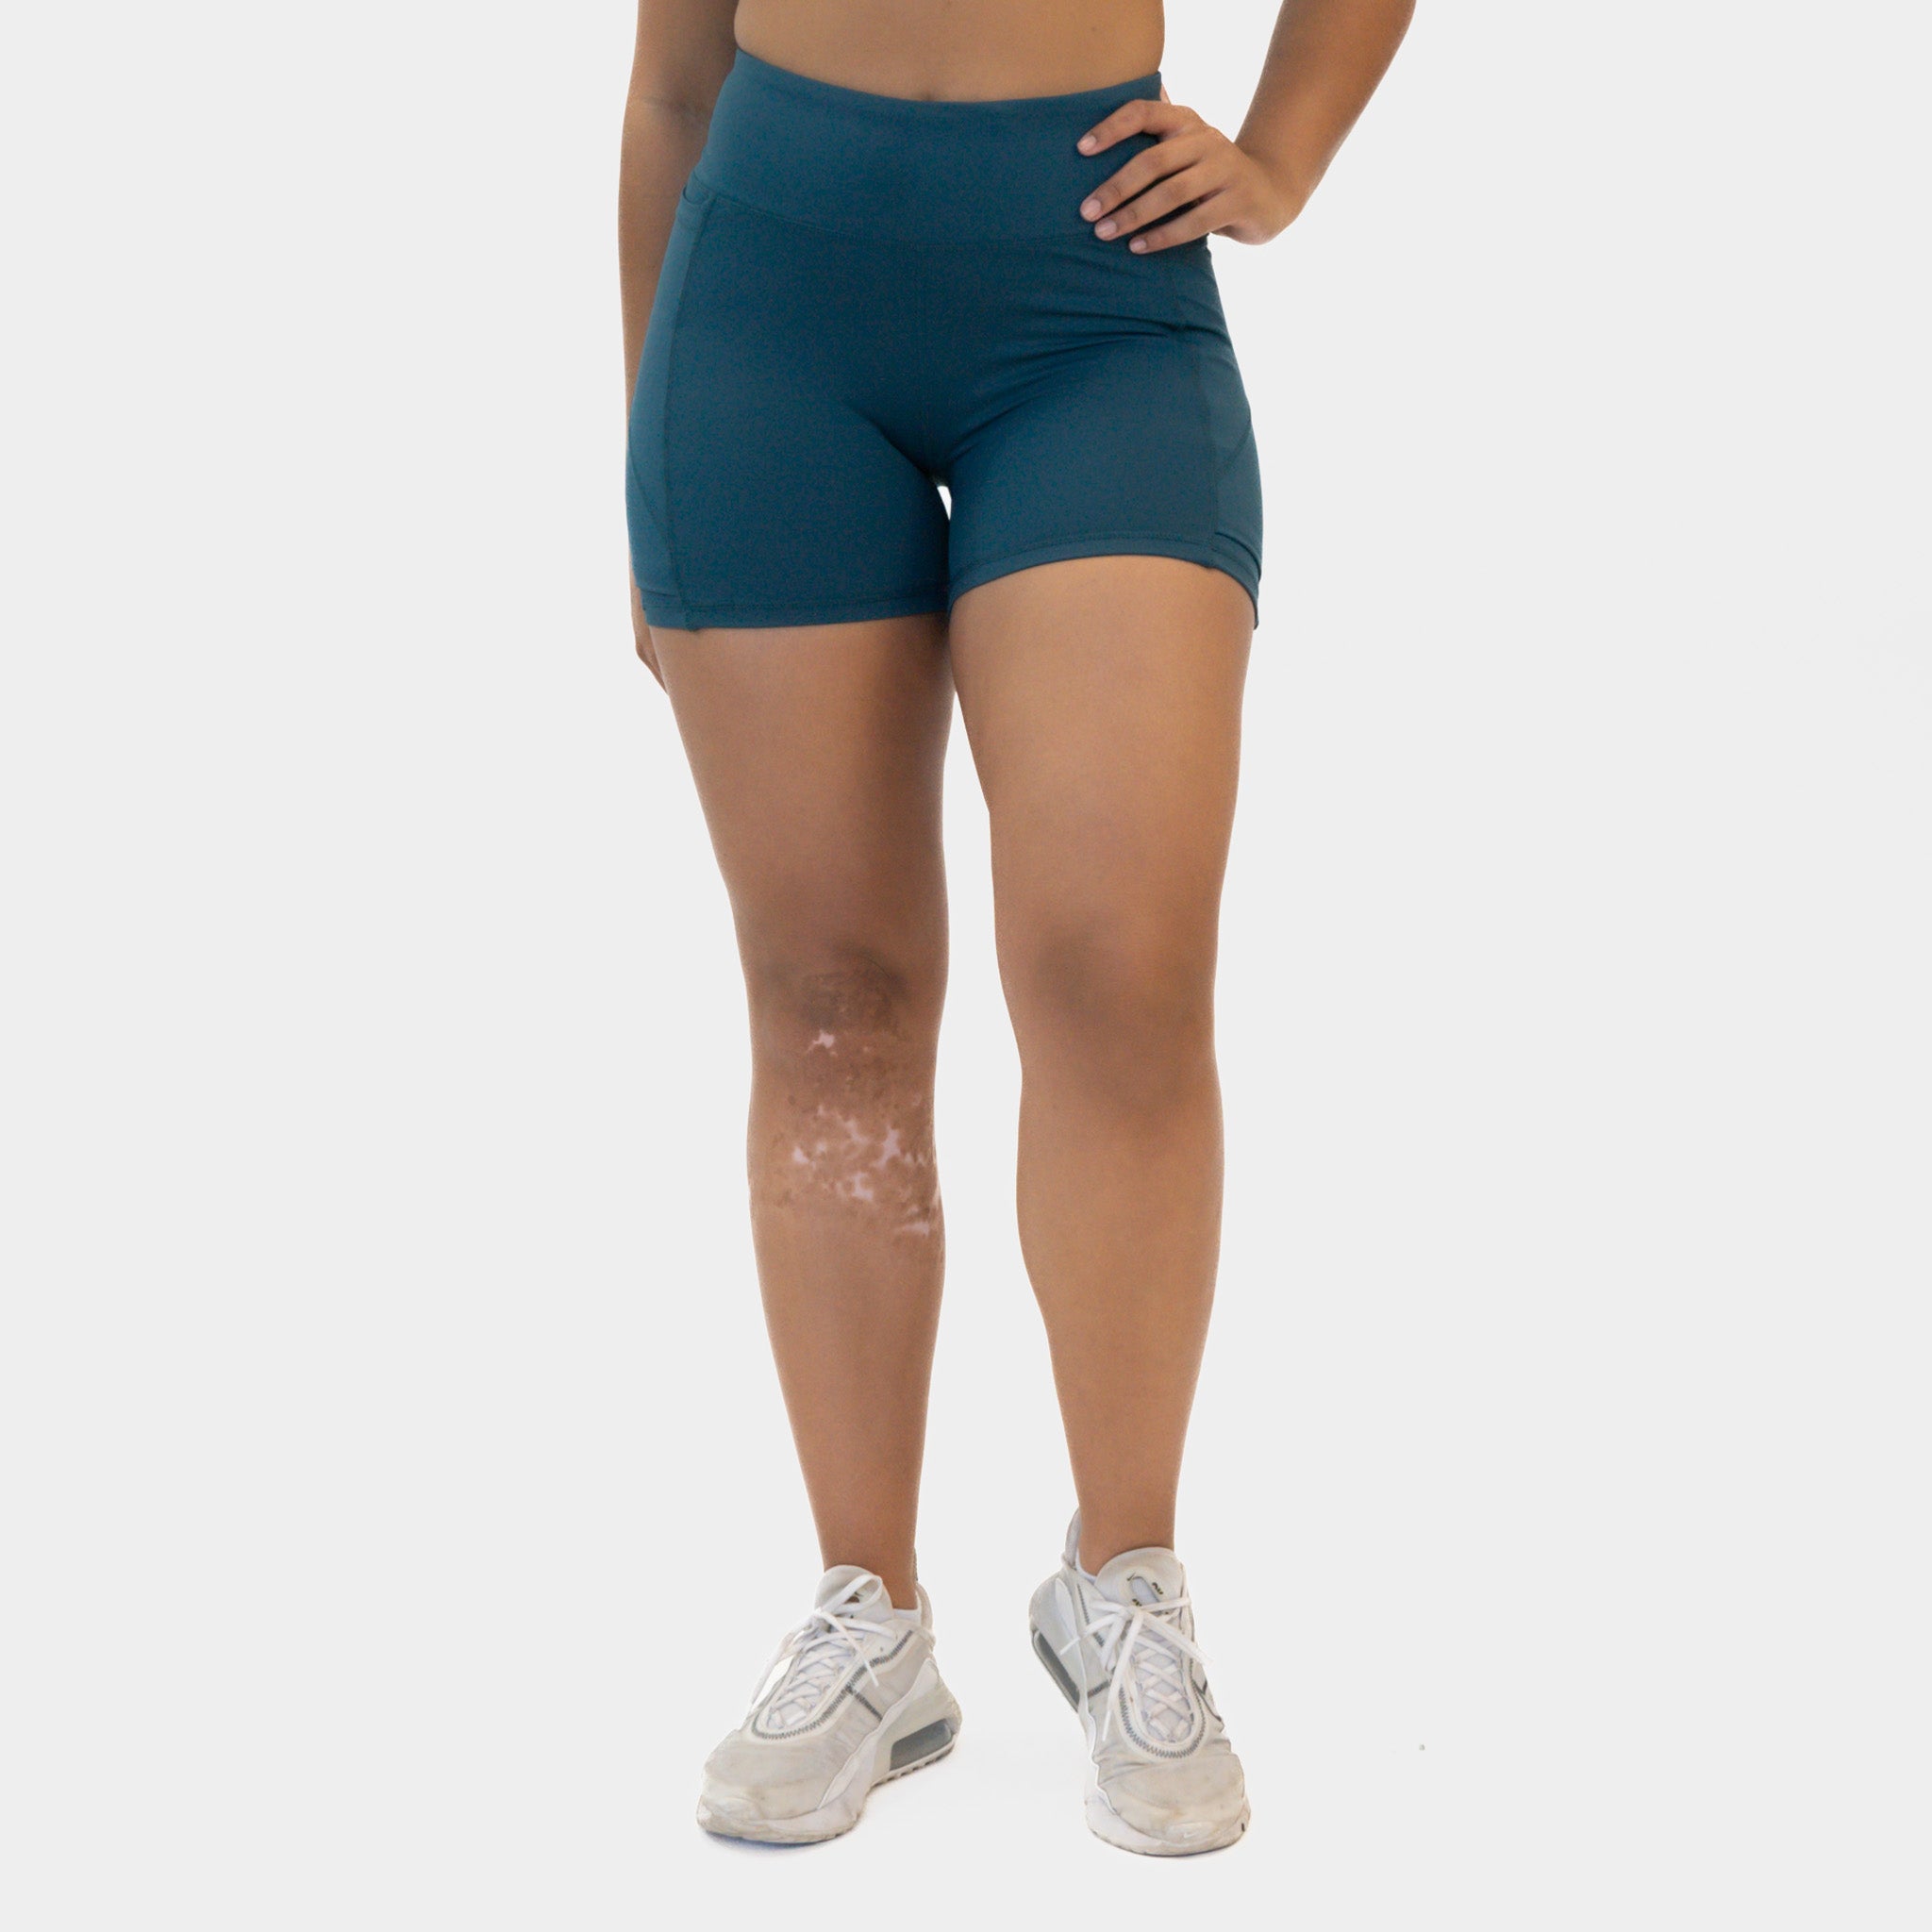 Baseline Shorts (5 in. inseam) - Juniper